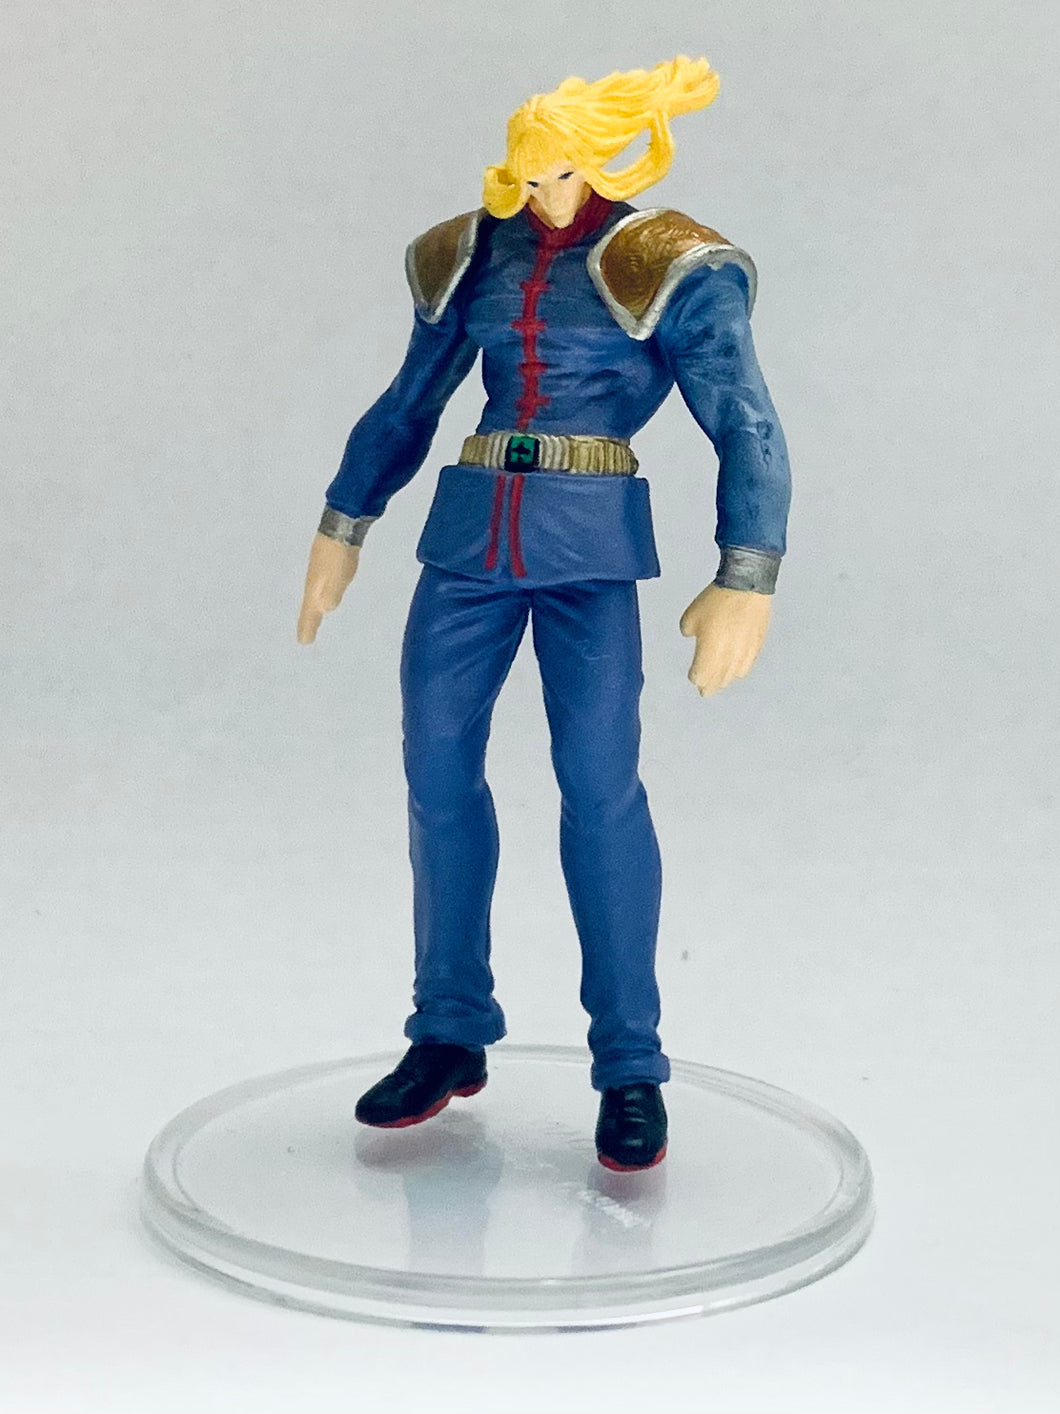 Hokuto no Ken - Shin - Fist of the North Star All-Star Retsuden Capsule Figure Collection Part 2